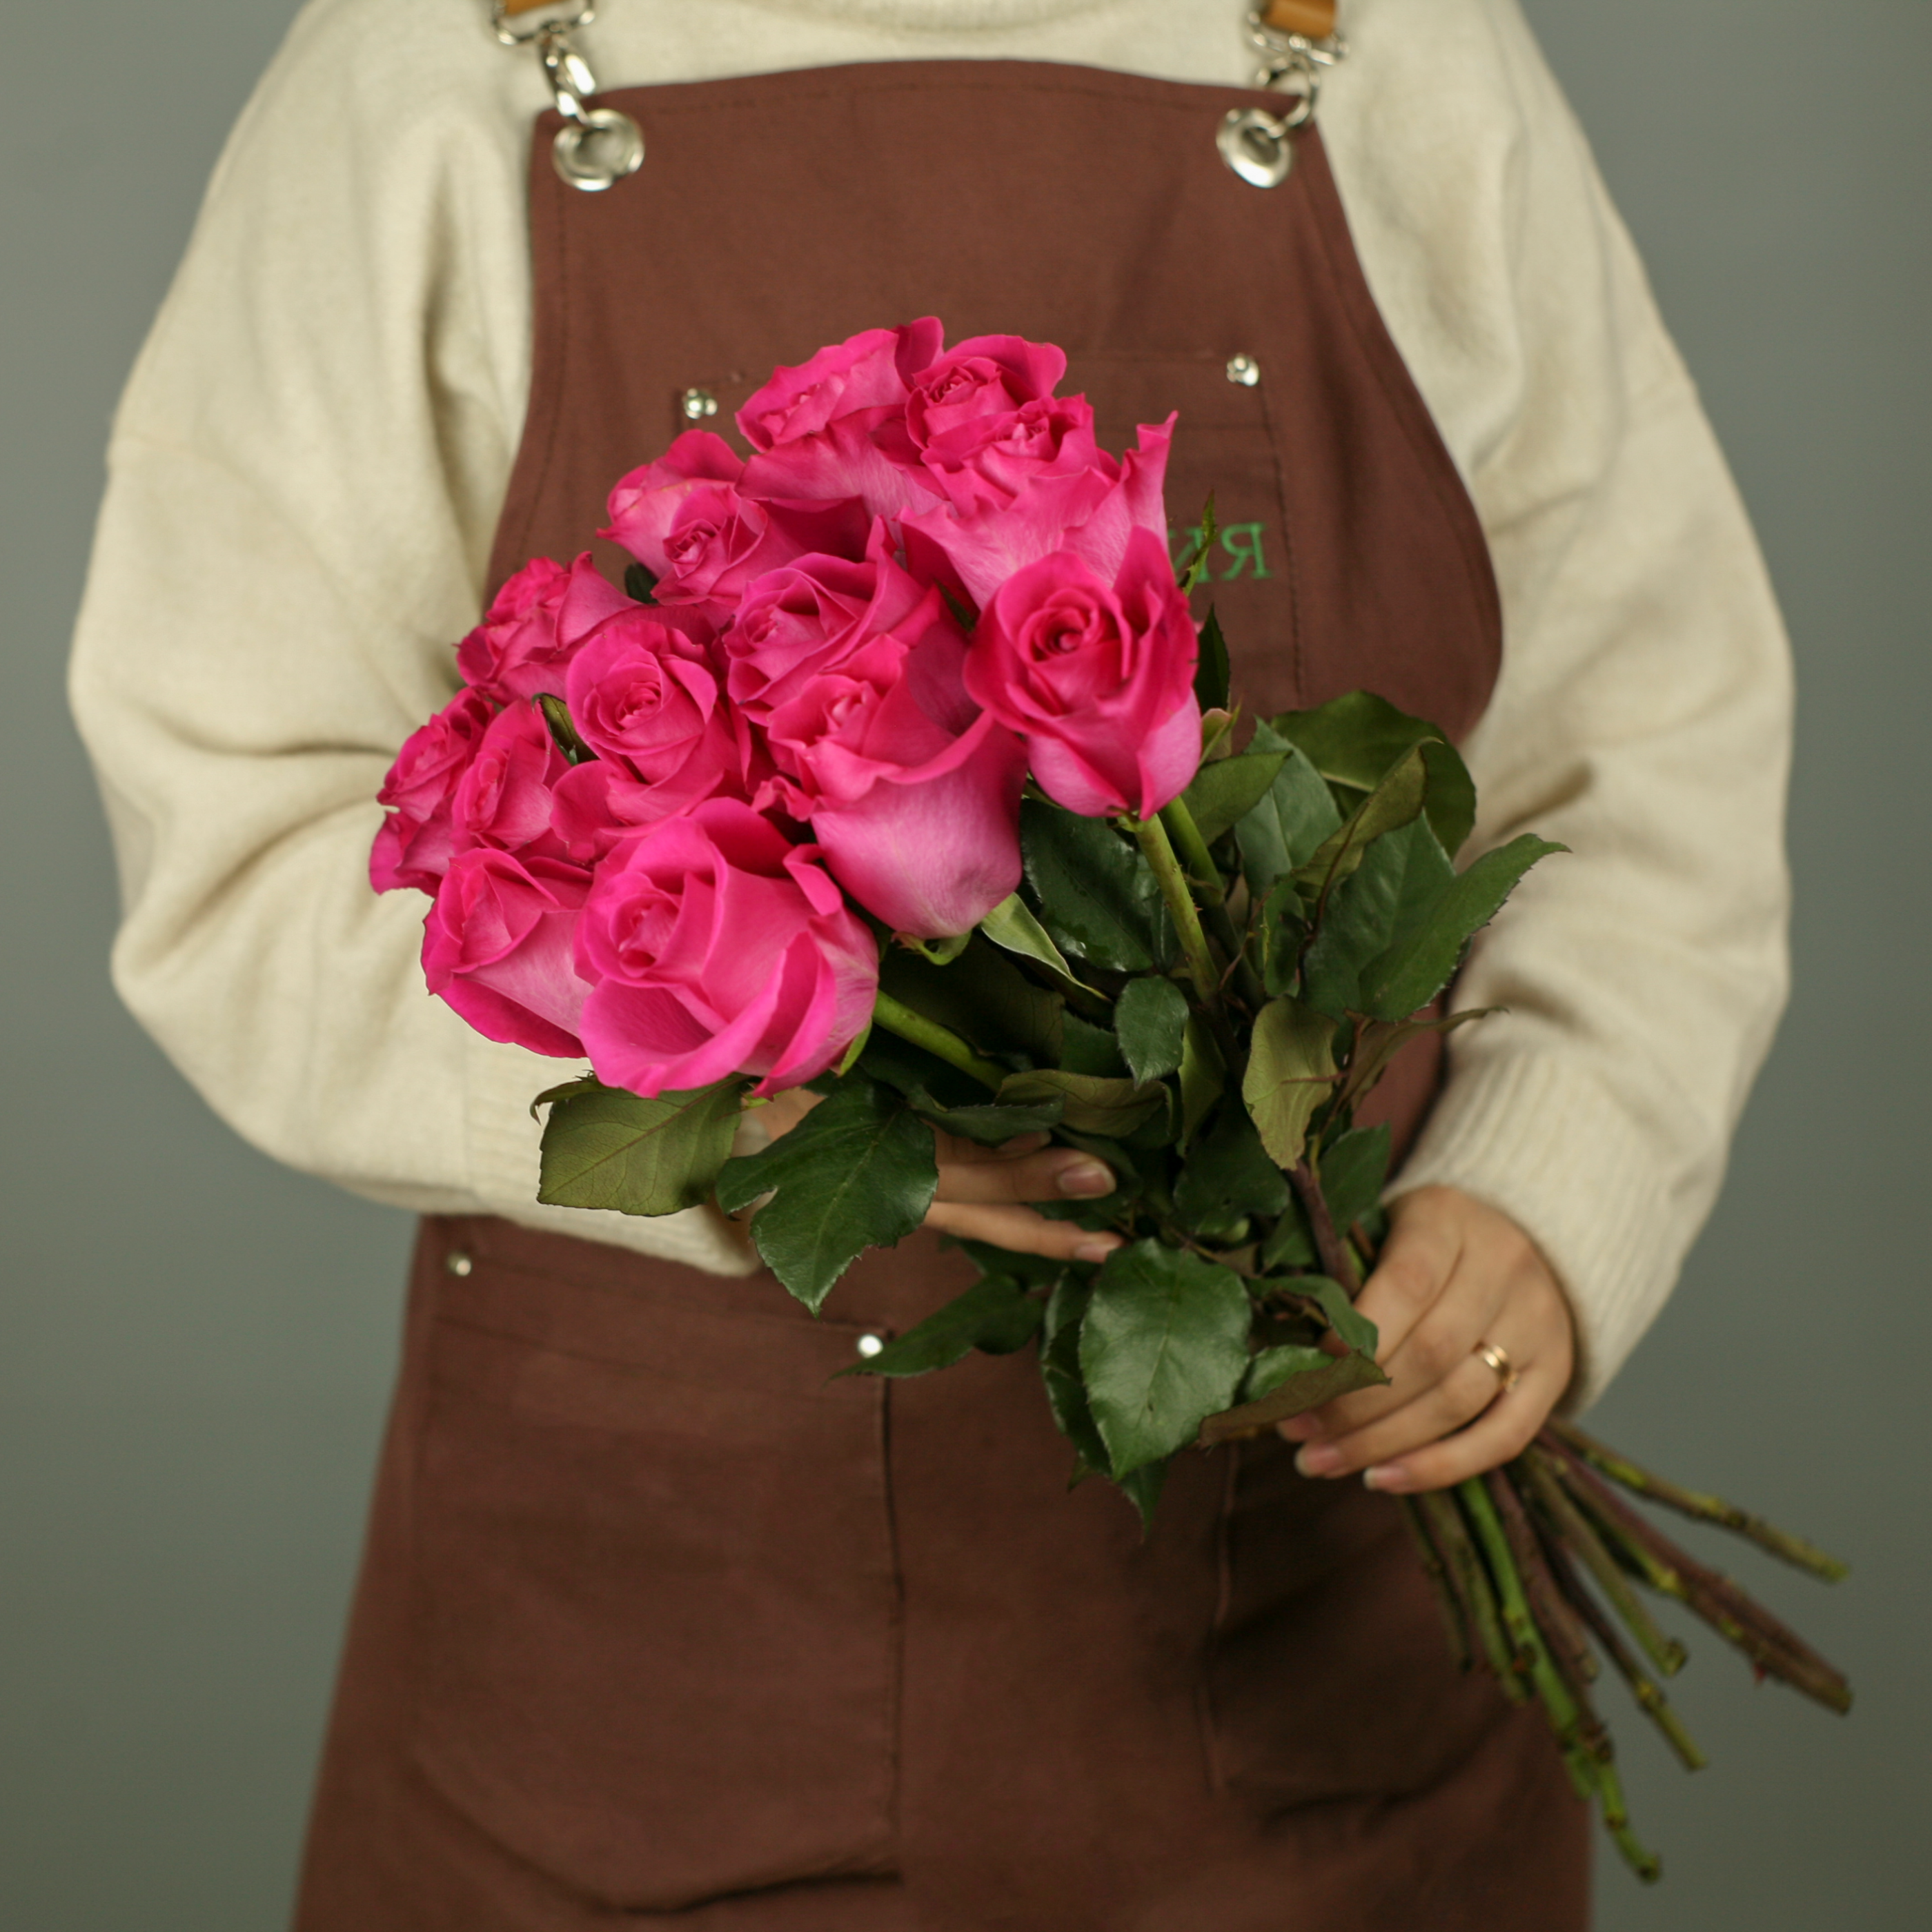 15 розовых роз 50 см